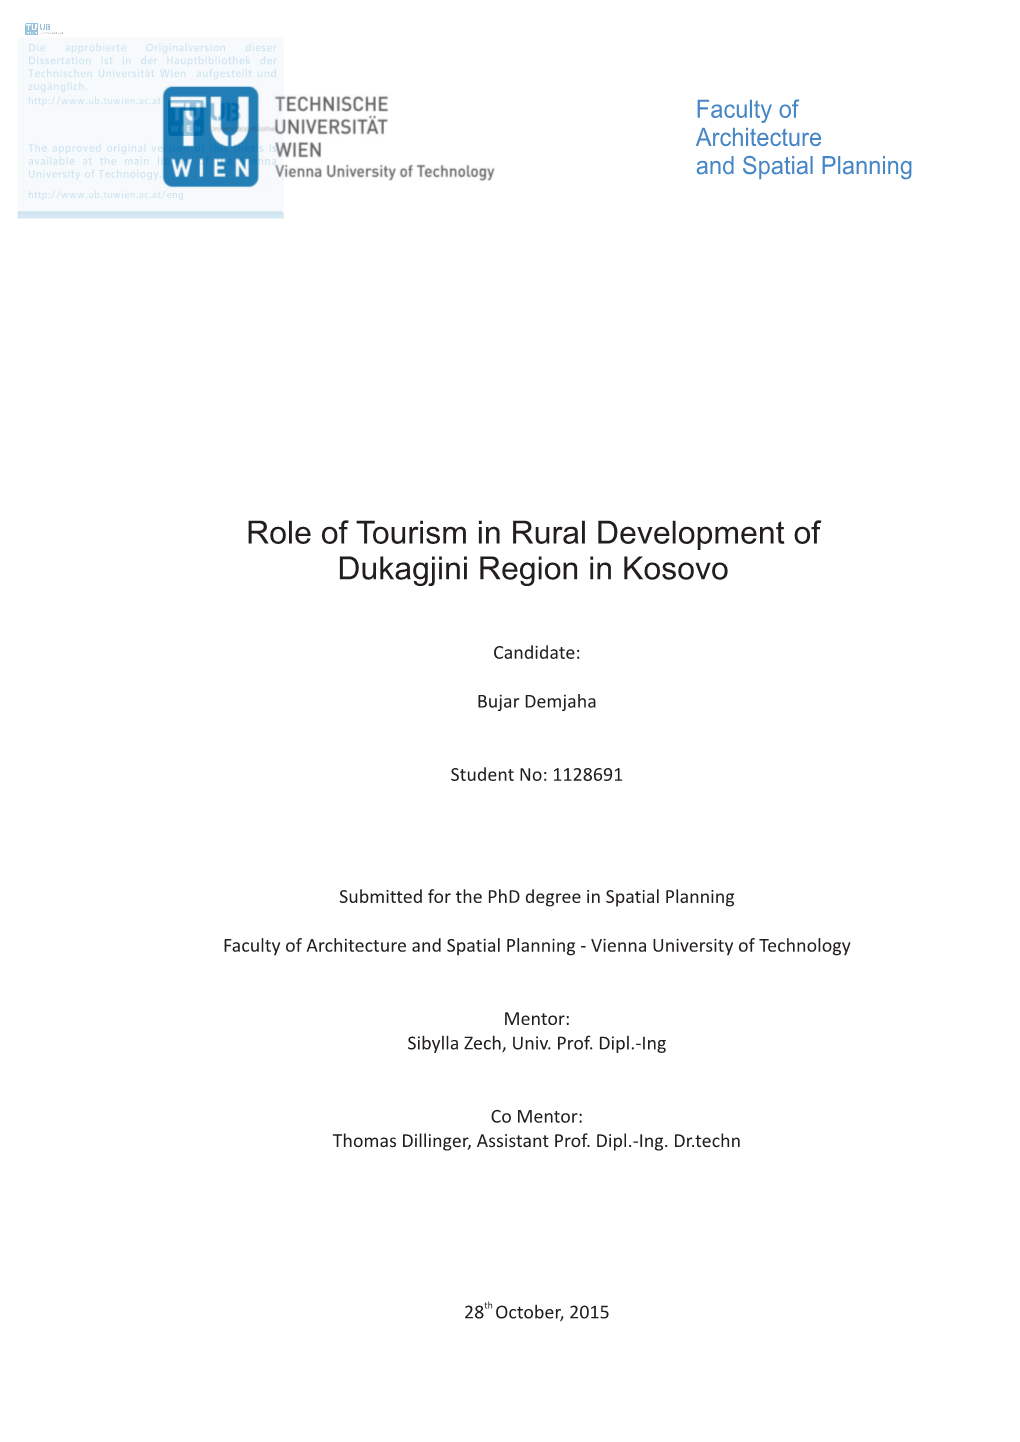 Role of Tourism in Rural Development of Dukagjini Region in Kosovo